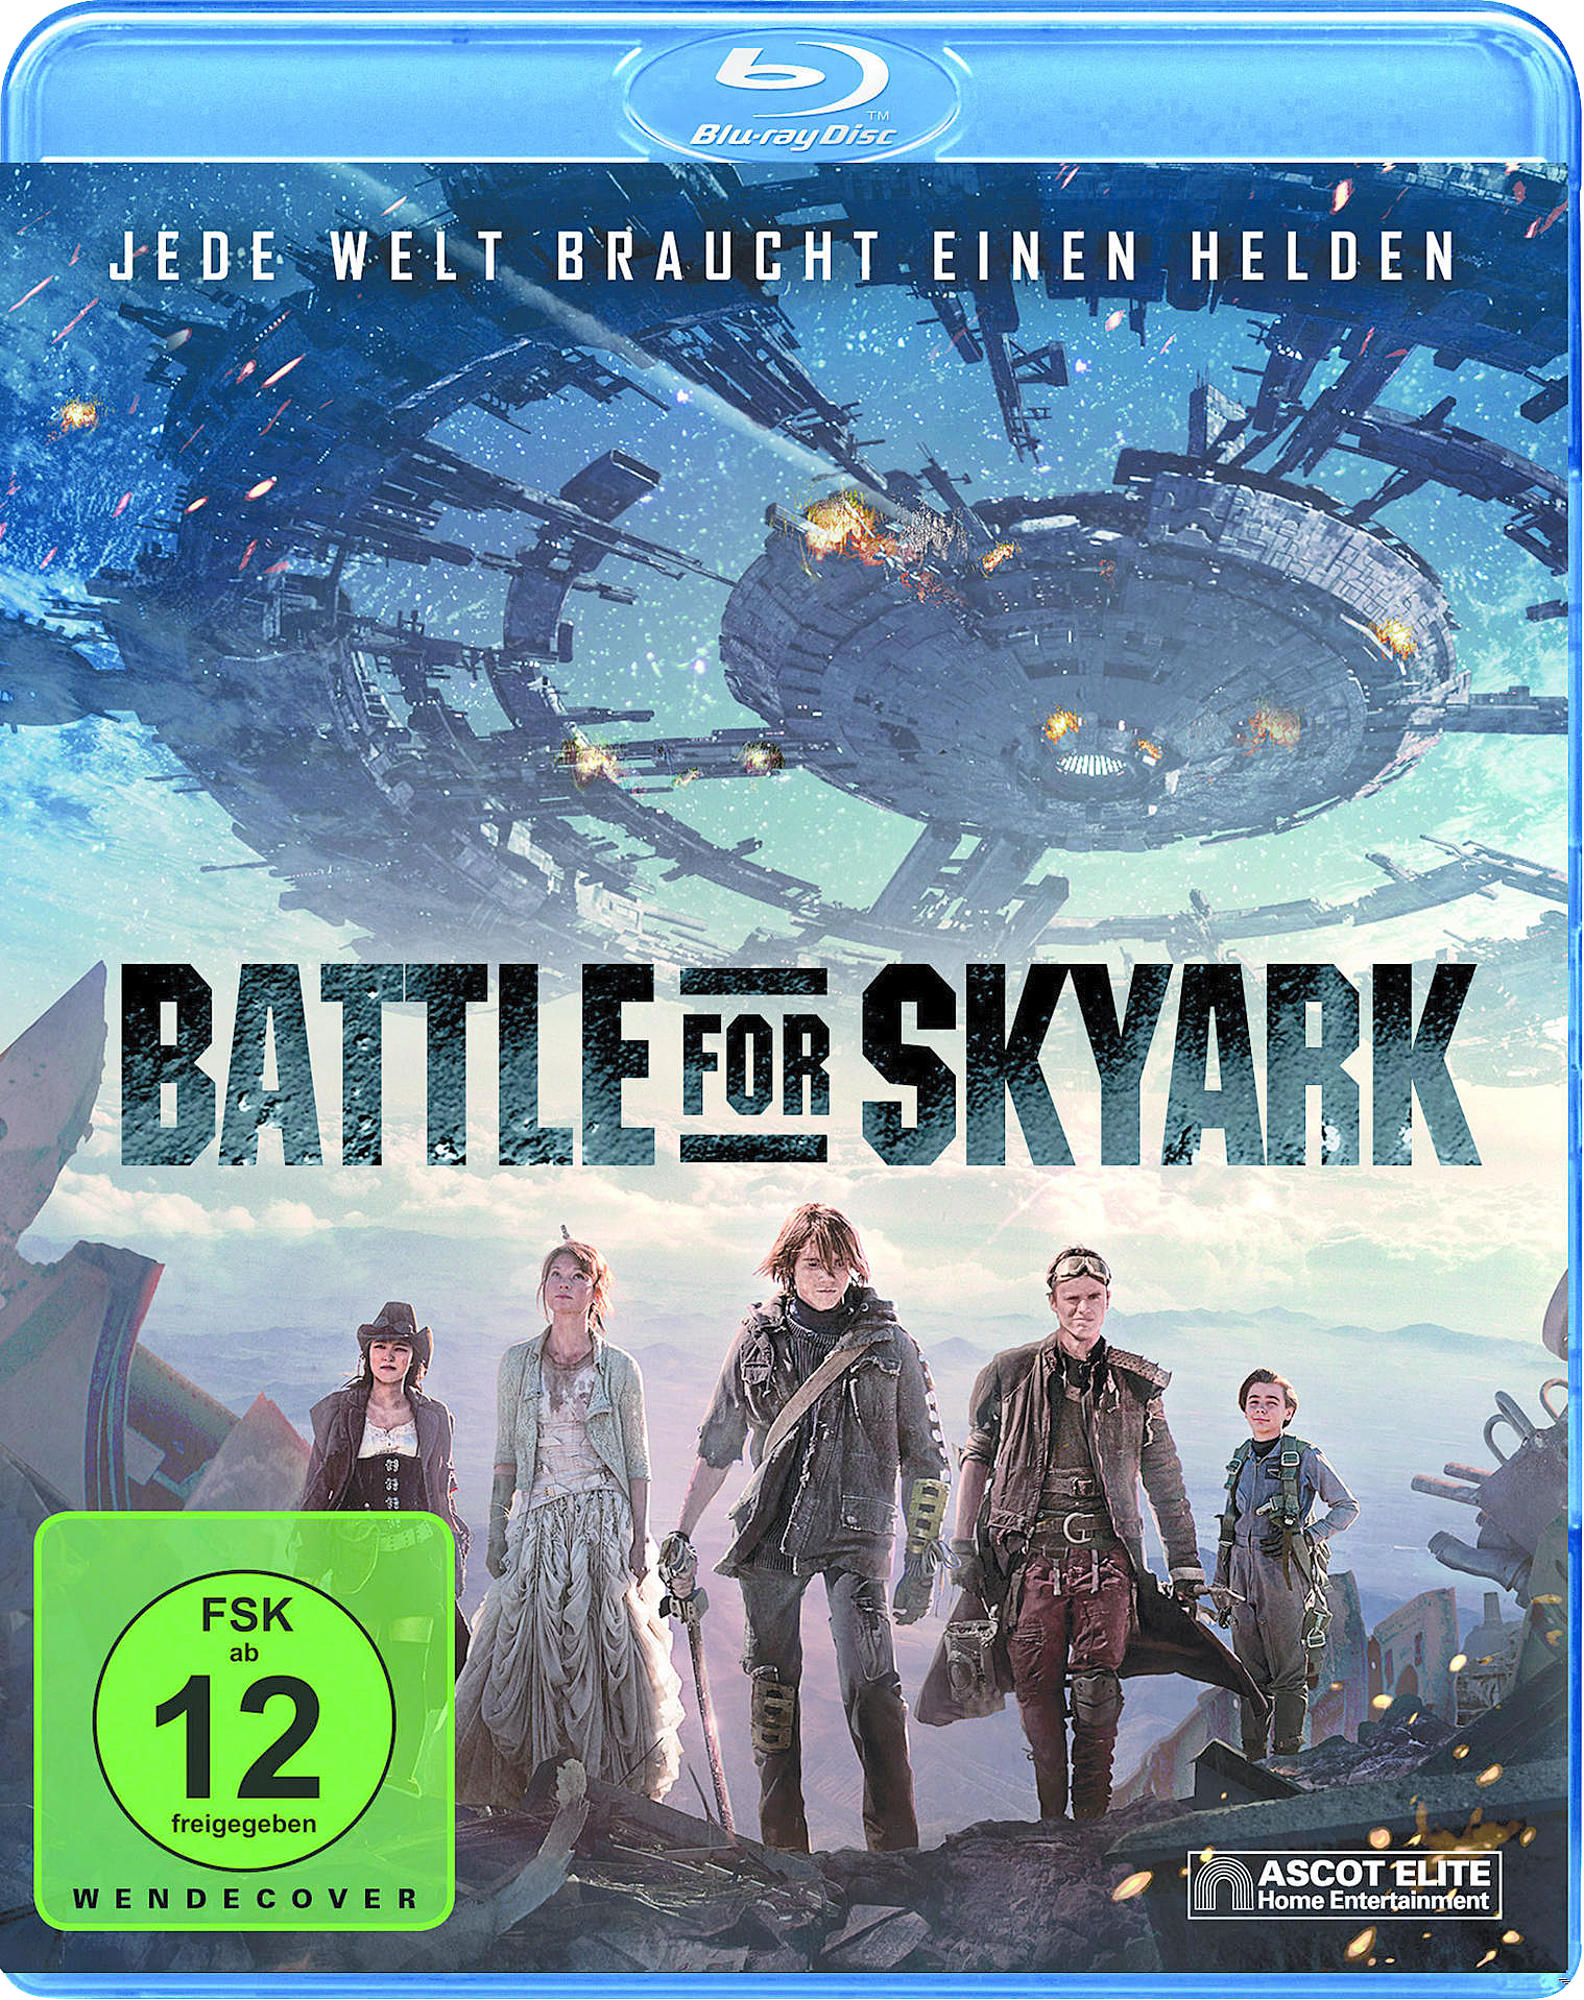 for Battle Blu-ray SkyArk